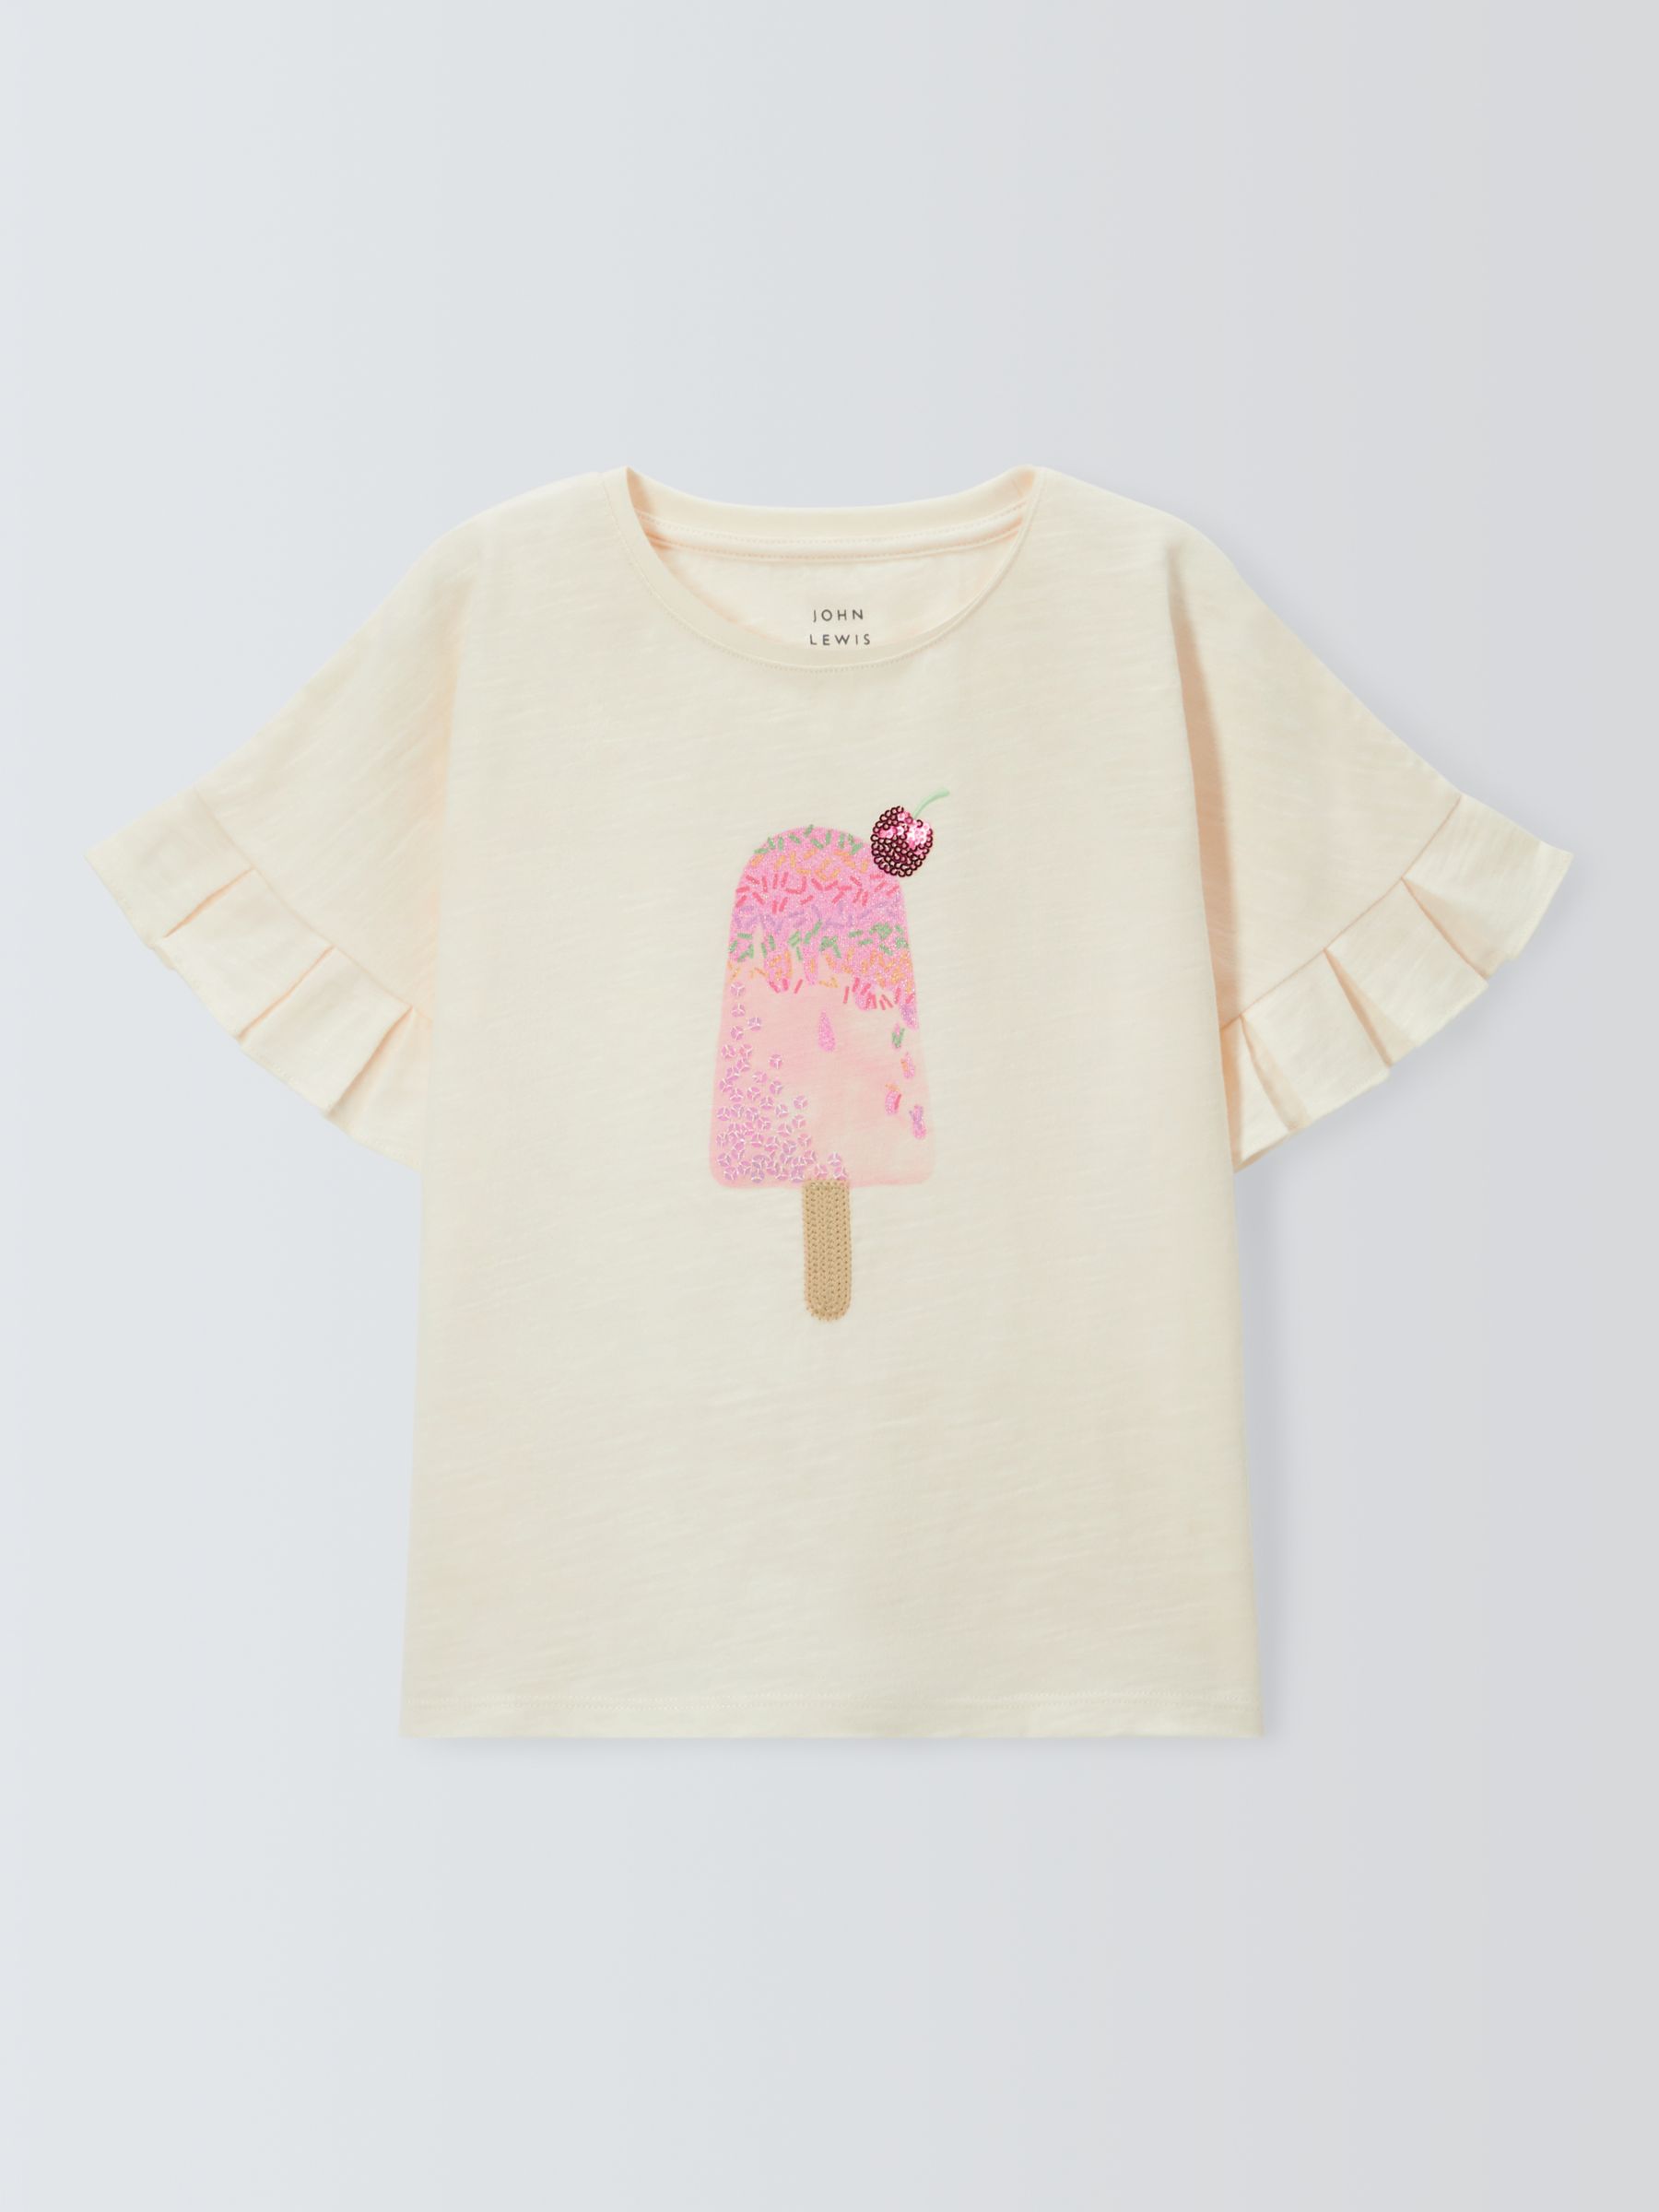 John Lewis Kids' Sequin Ice Lolly T-Shirt, Gardenia, 9 years